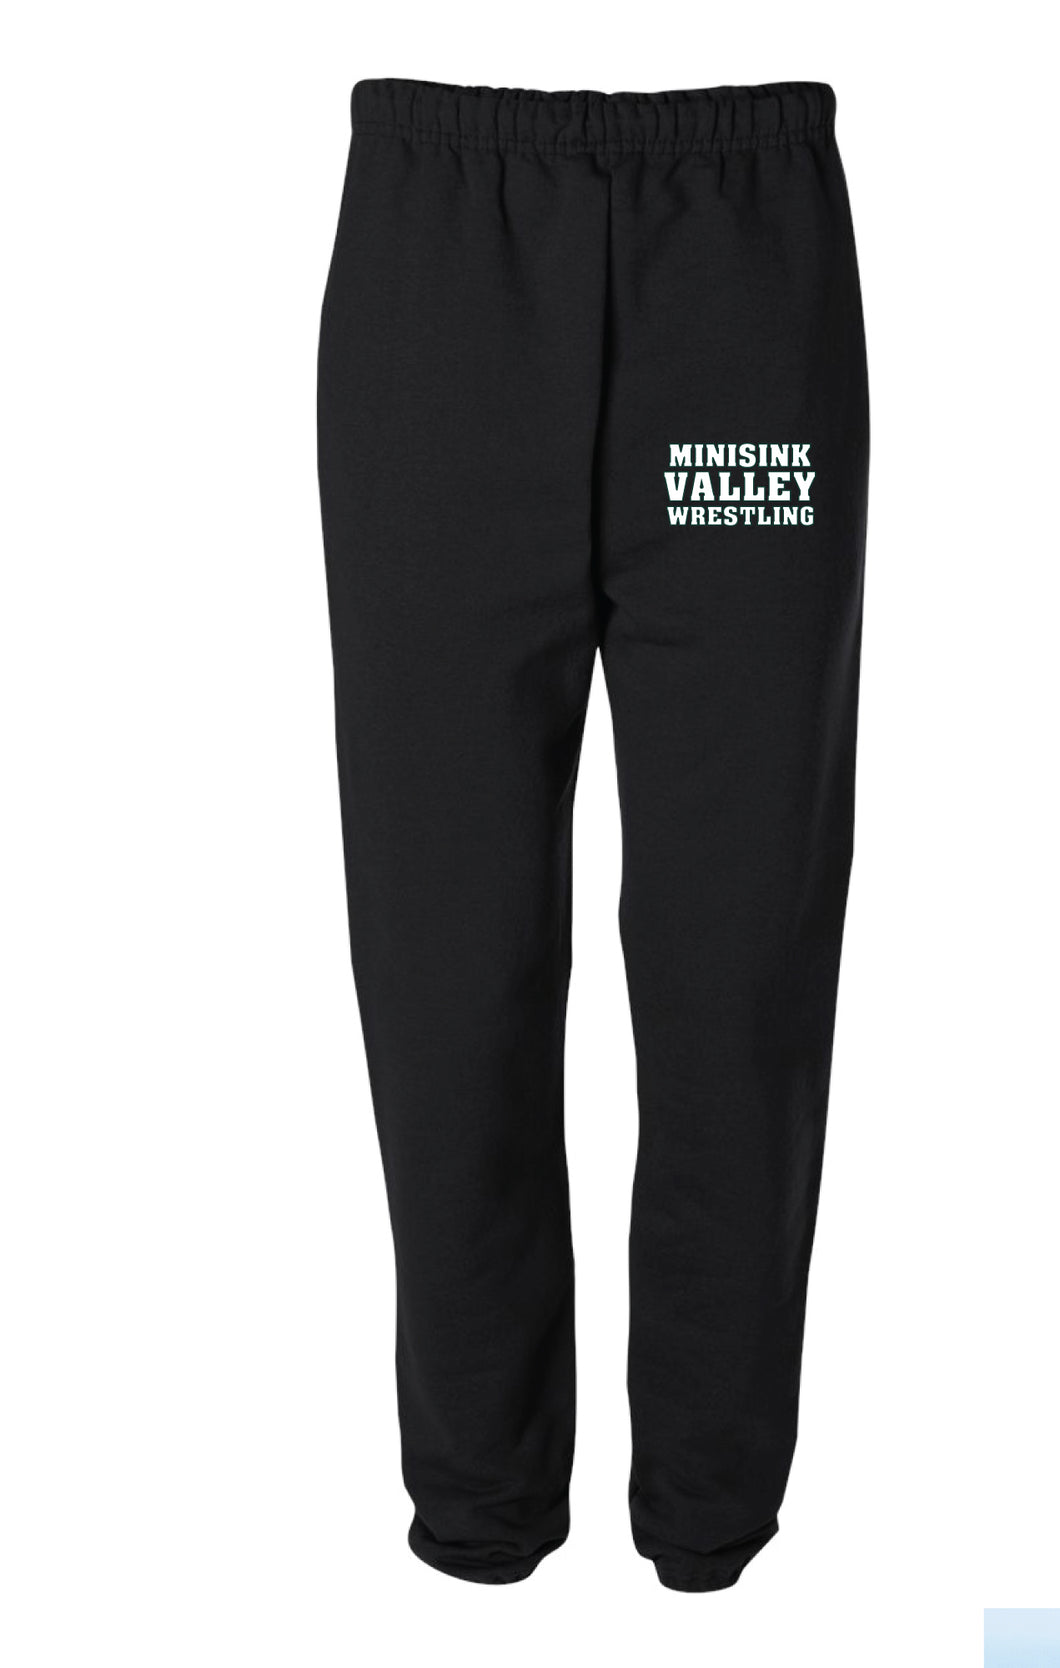 Minisink Valley Wrestling Cotton Sweatpants - Black - 5KounT